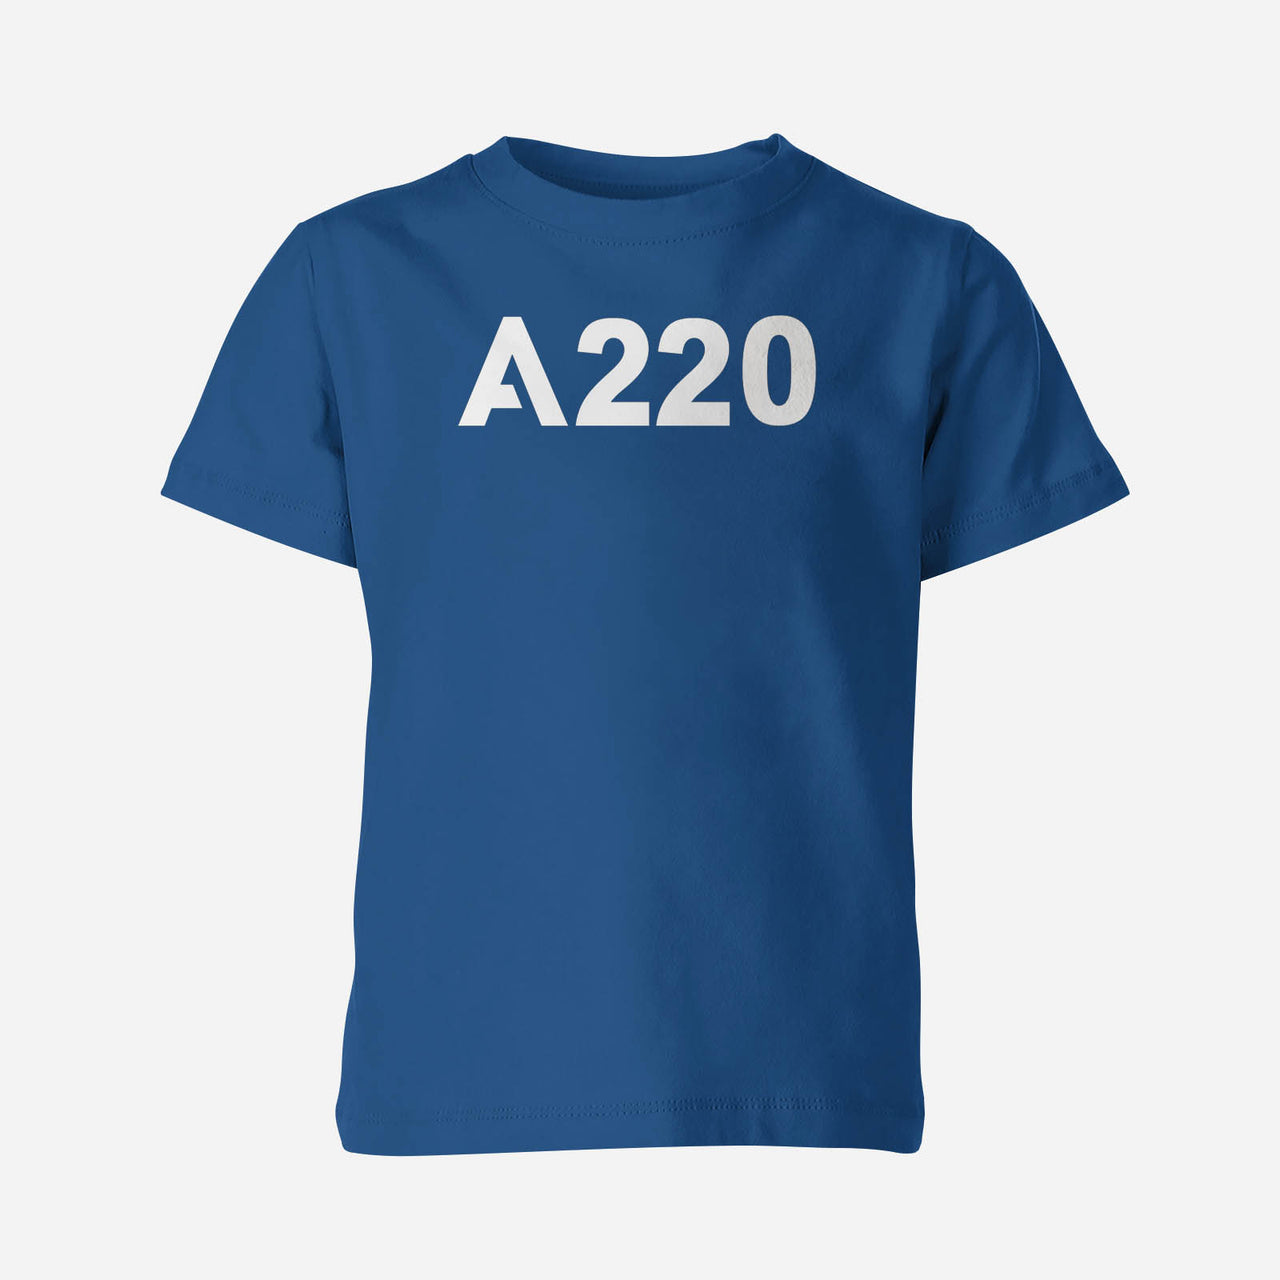 A220 Flat Designed Children T-Shirts